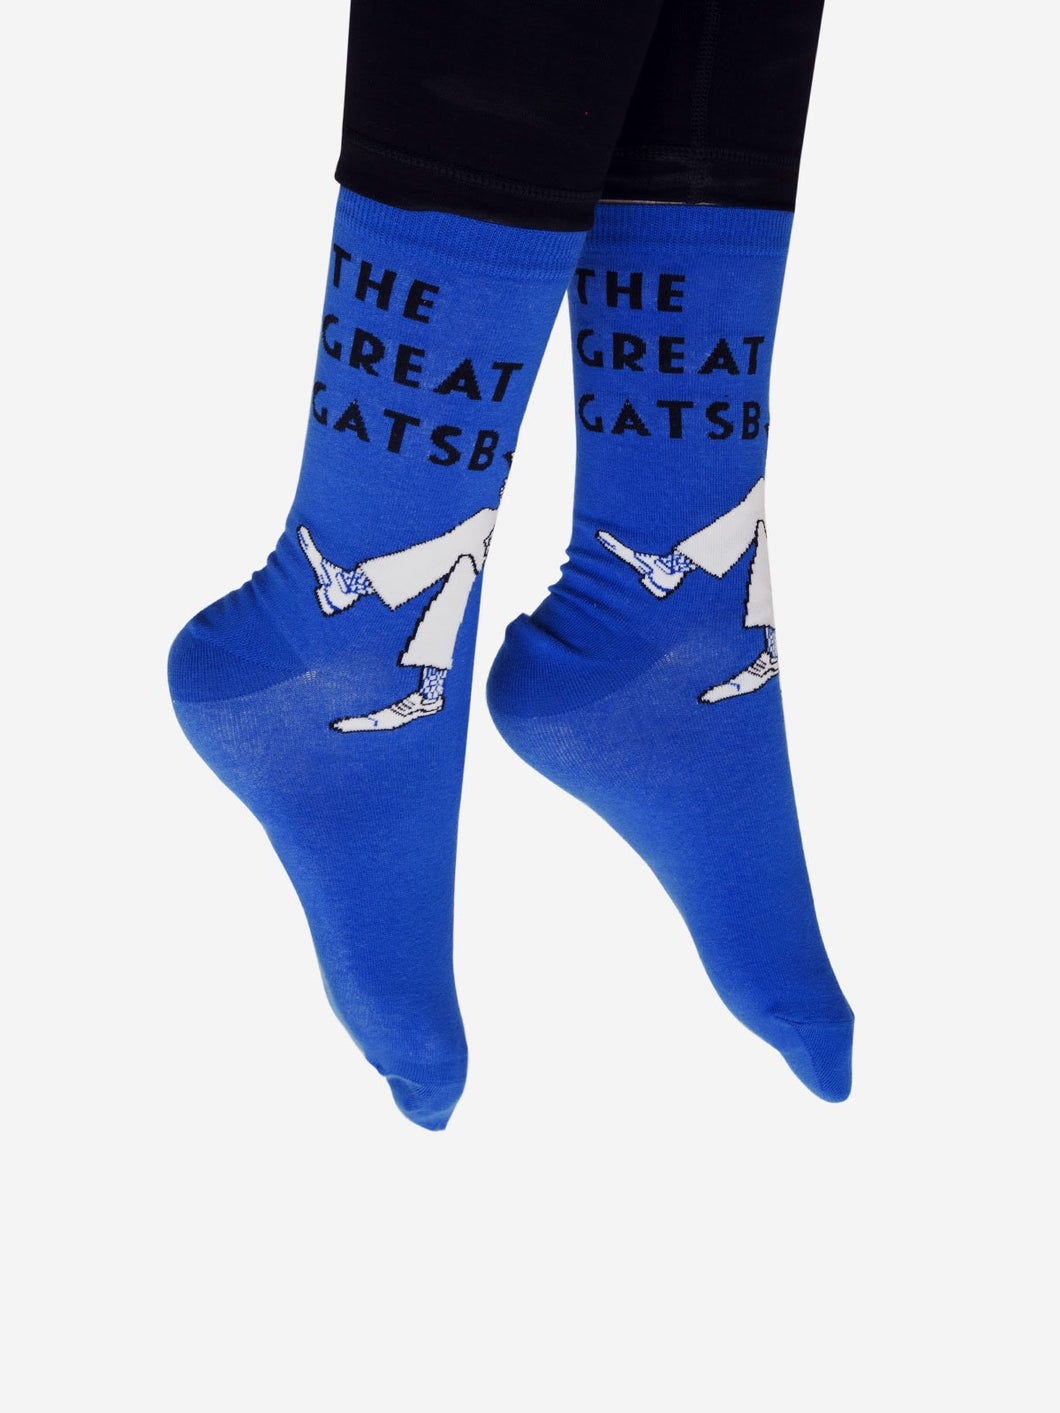 Great Gatsby Socks